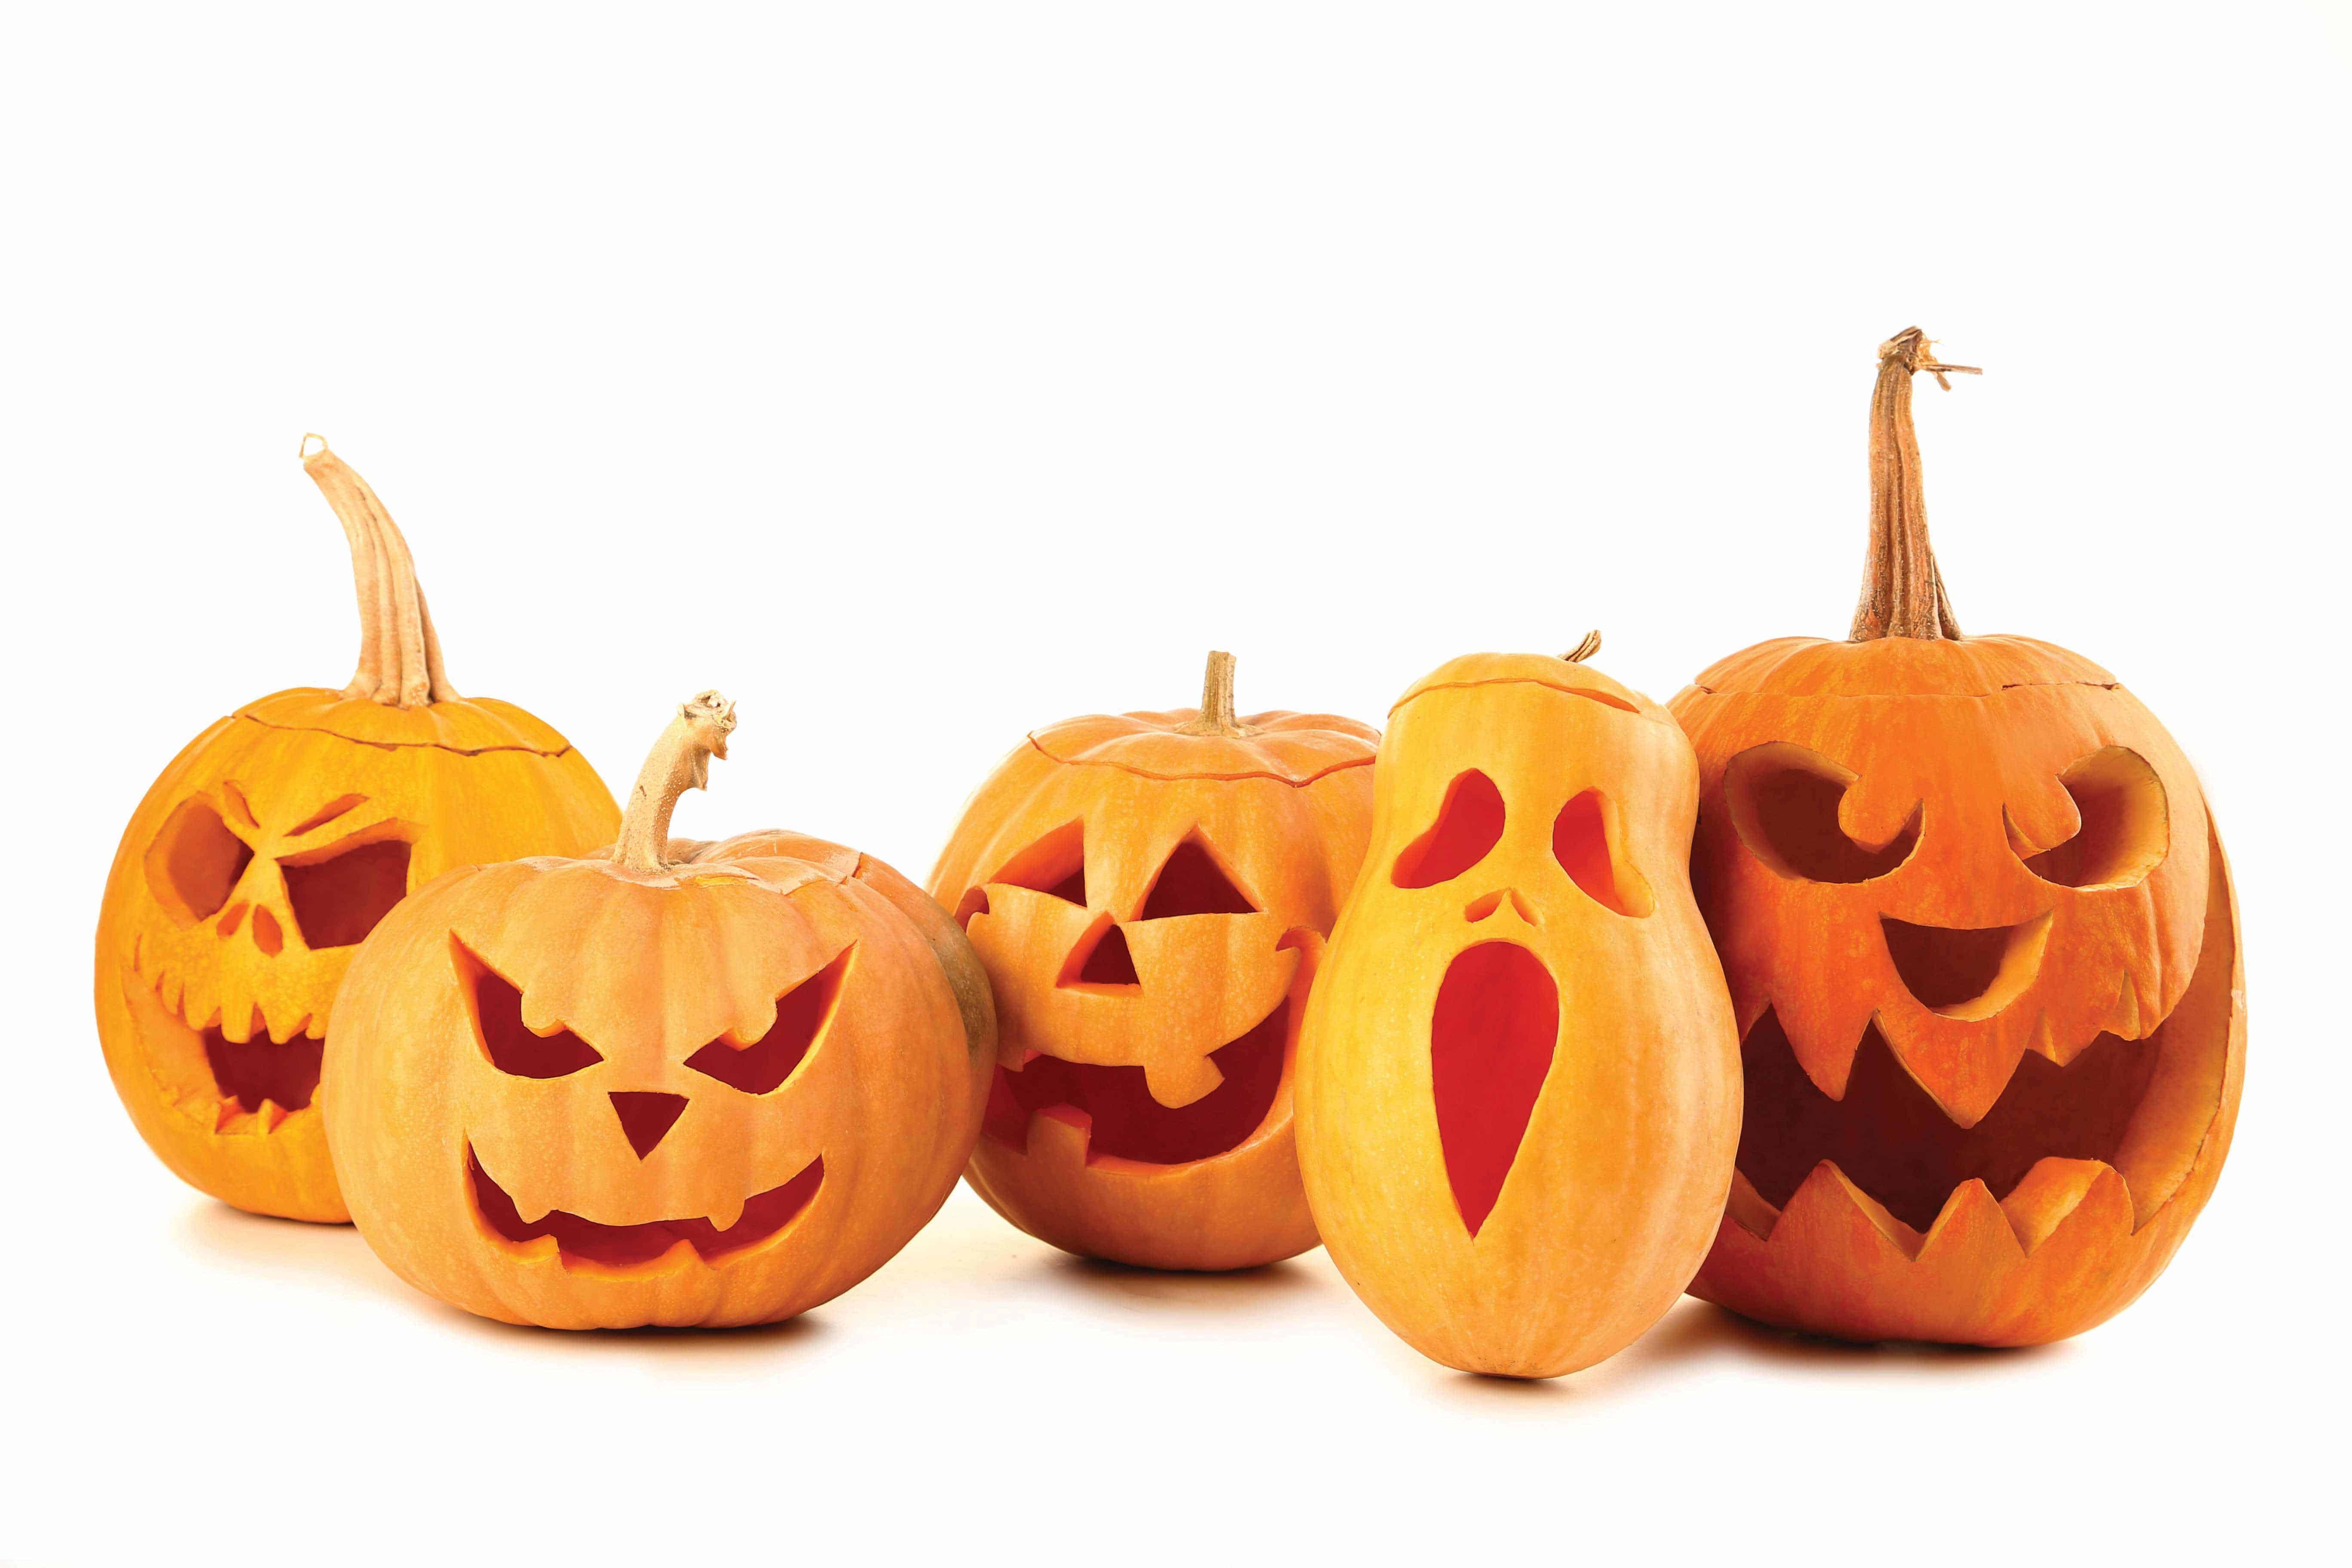 Pumpkin carving tips and tricks 15 holiday pumpkin decoration ideas